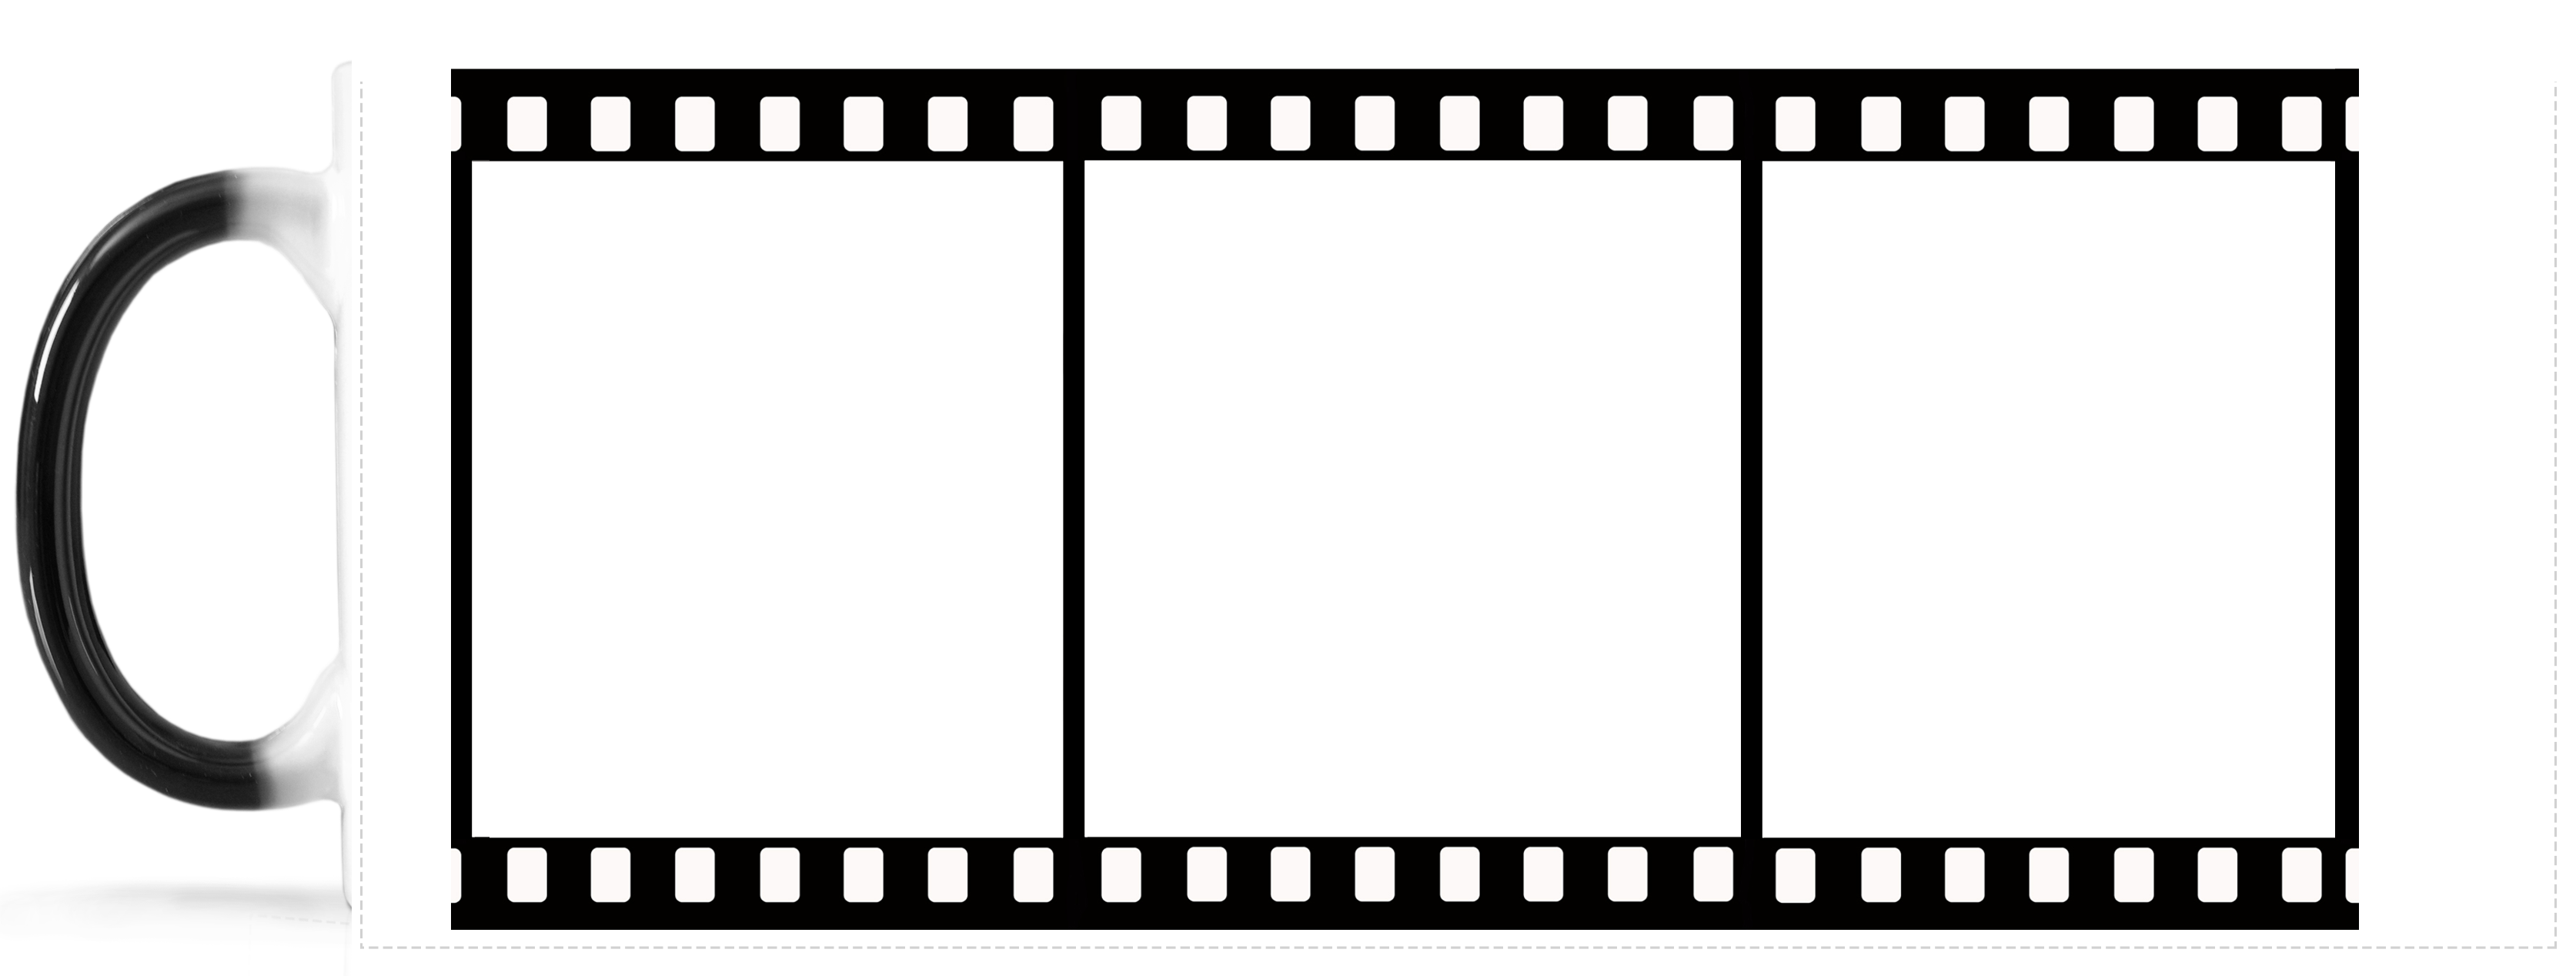 movie reel frame